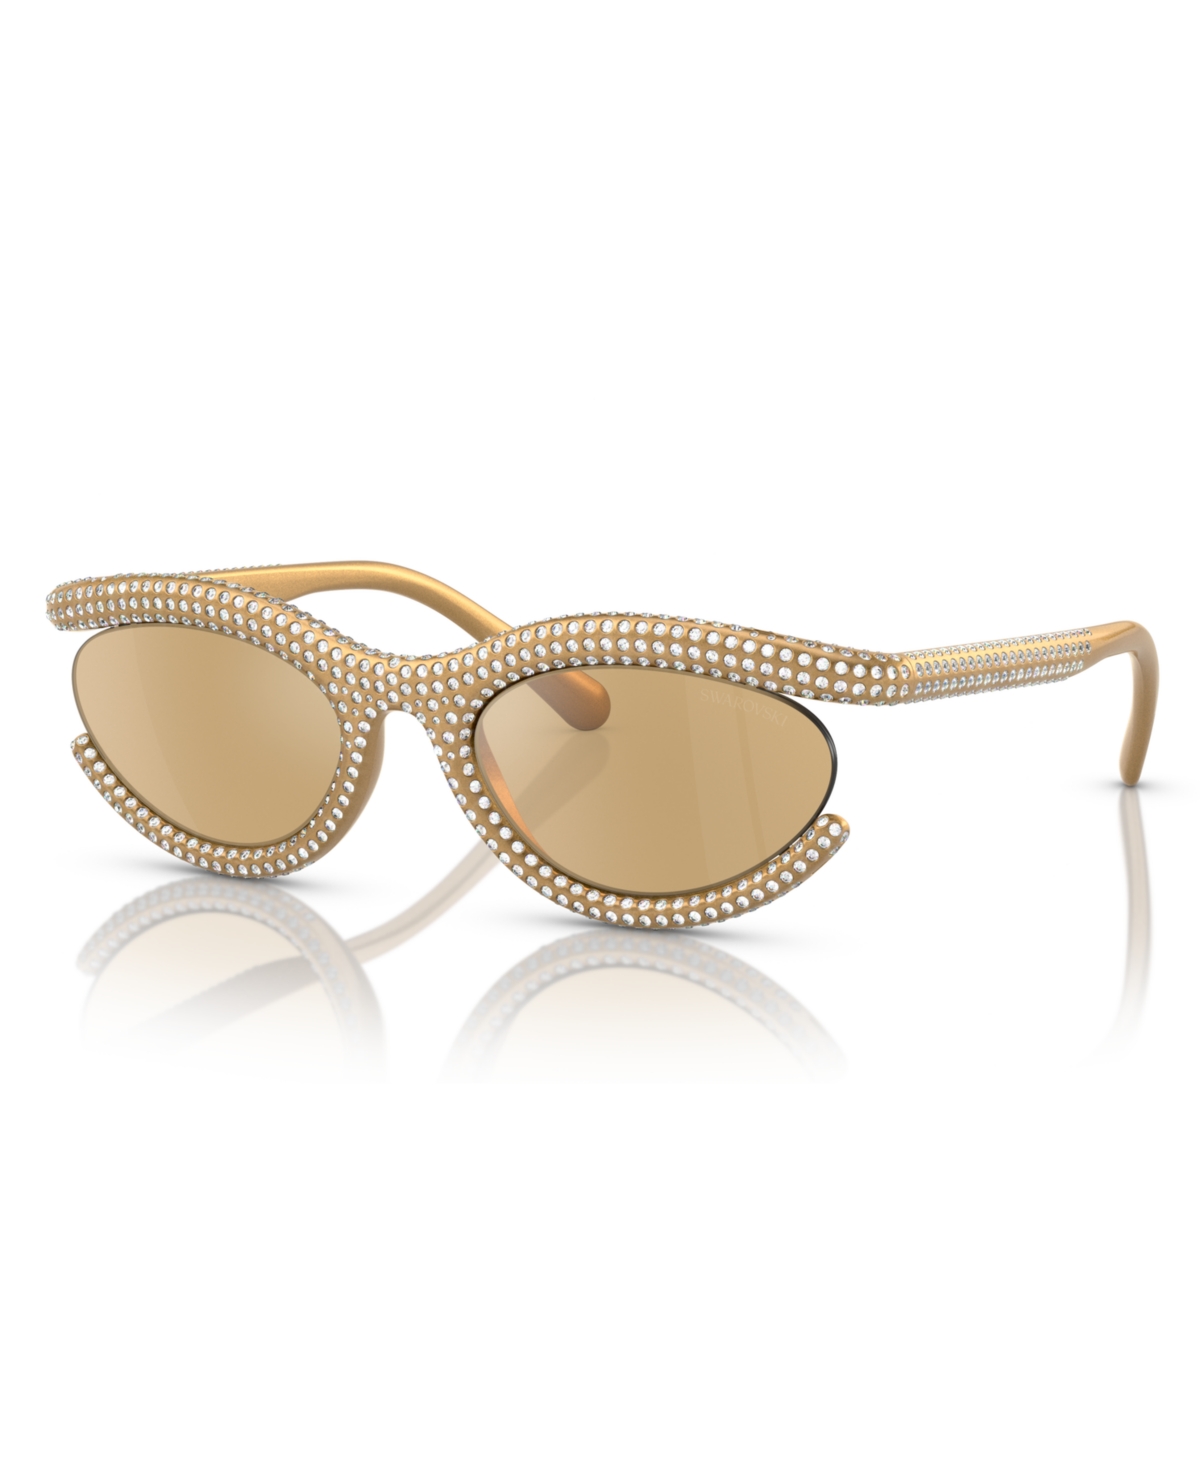 Women's Sunglasses SK6006 - Light Yellow Mirror